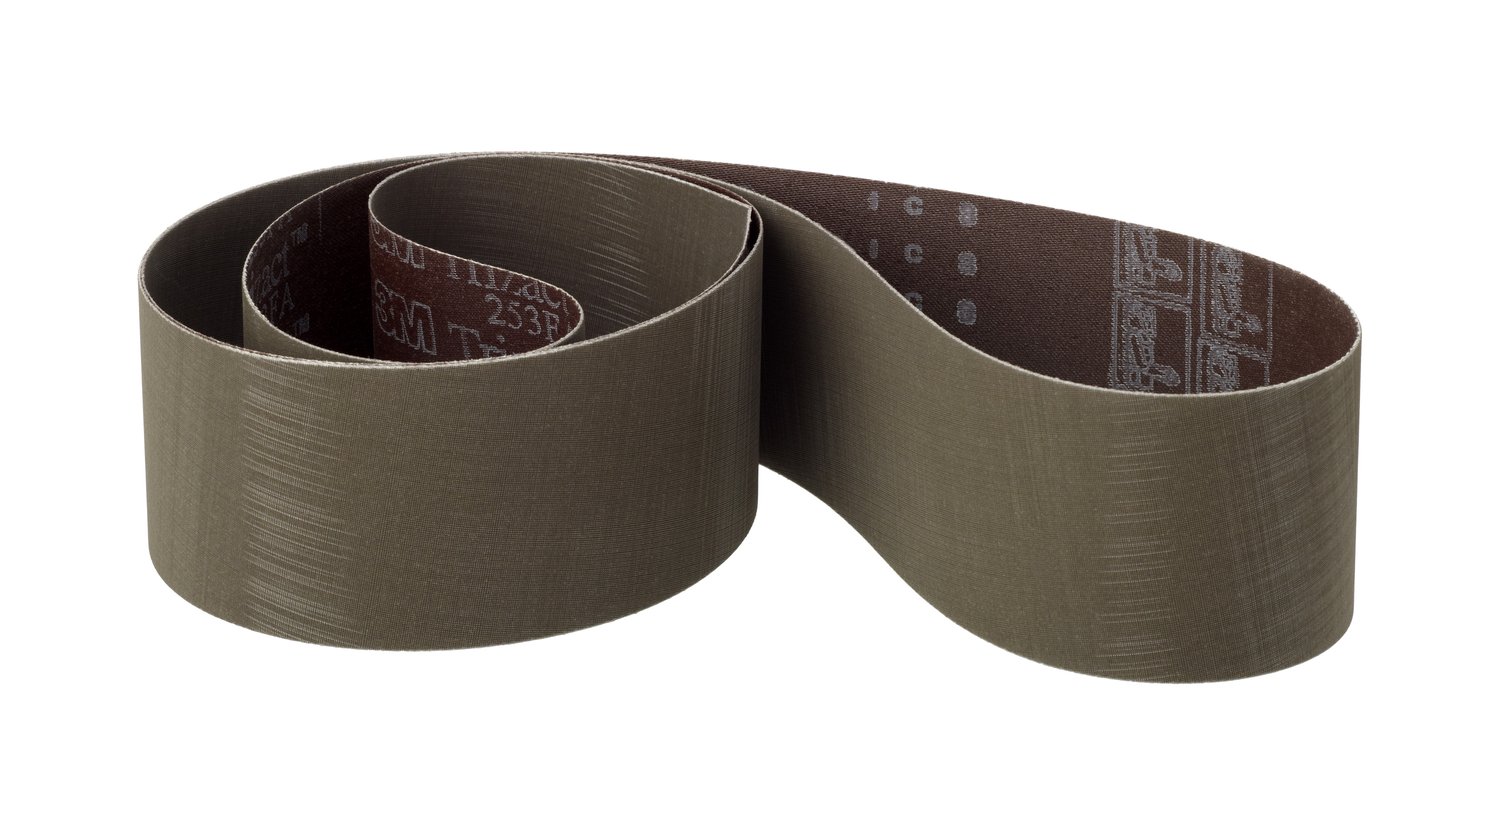 7010536876 - 3M Trizact Cloth Belt 253FA, A80 XF-weight, 4 in x 84 in, Film-lok,
Full-flex